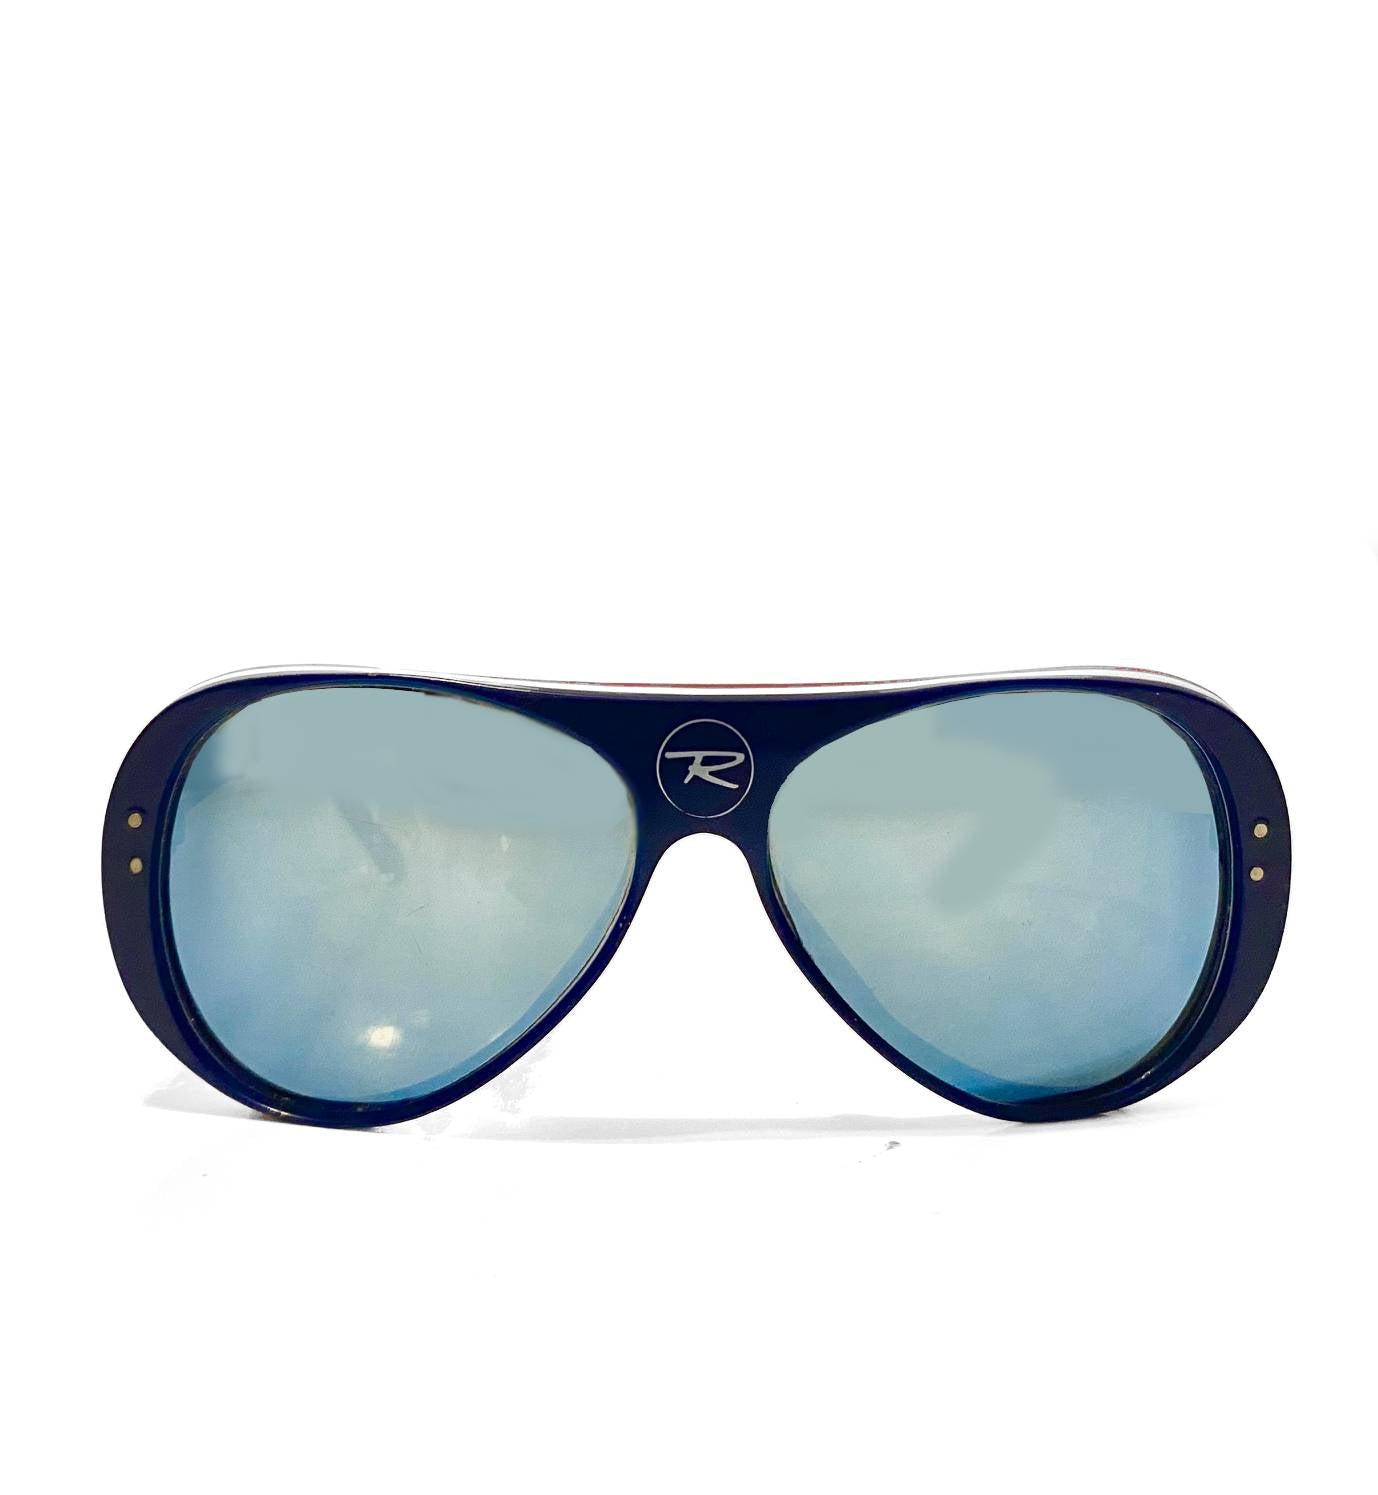 1980s Rossignol Mirrored Ski / Beach Light Blue Sunglasses - style - CHNGR